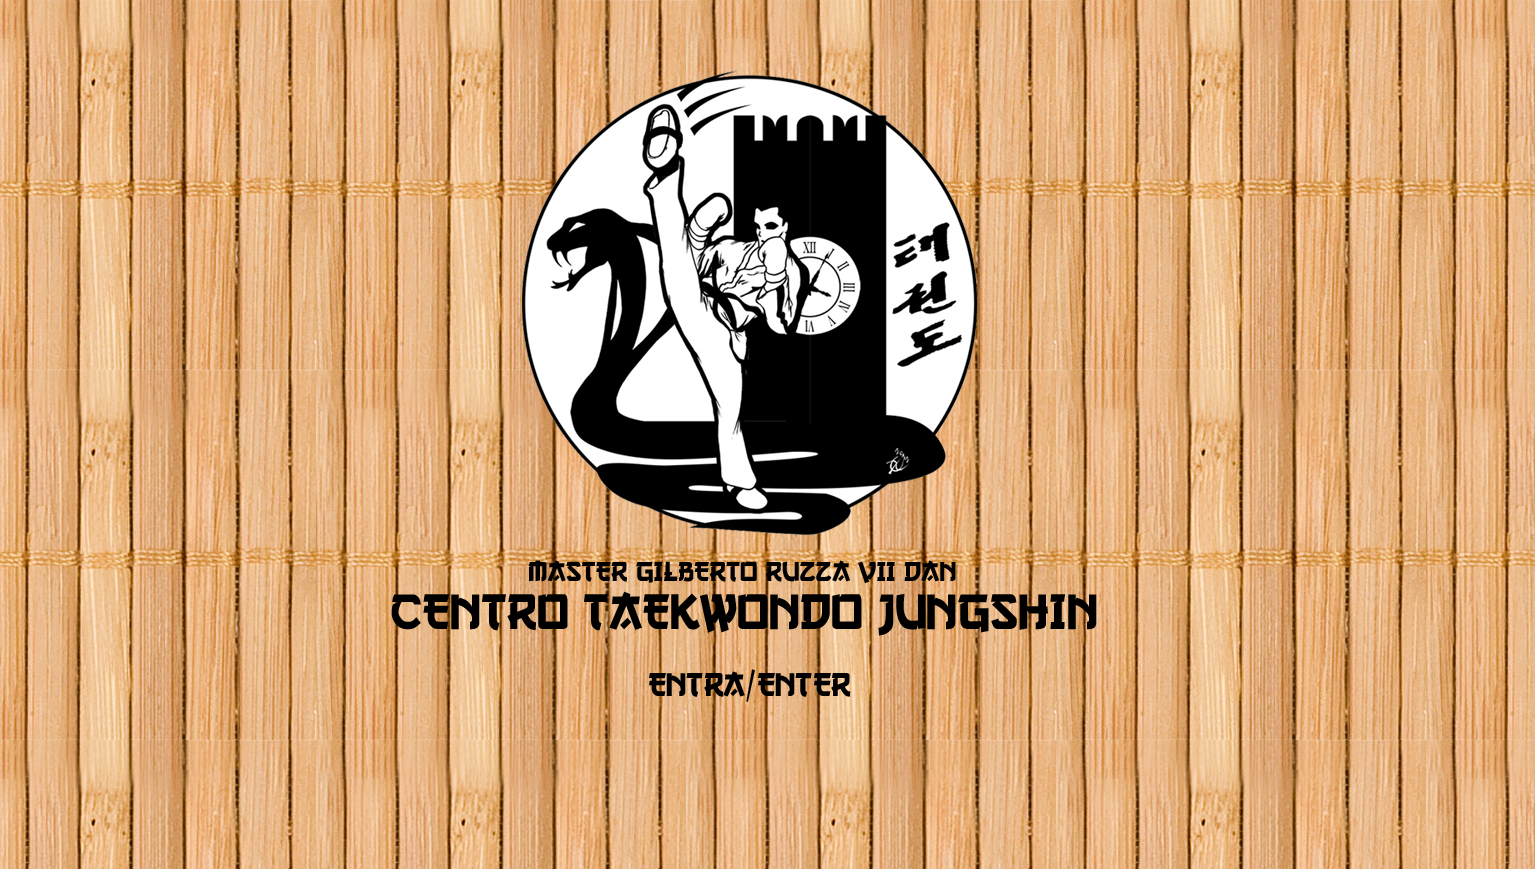 Site development for the gym JUNGSHIN Taekwondo